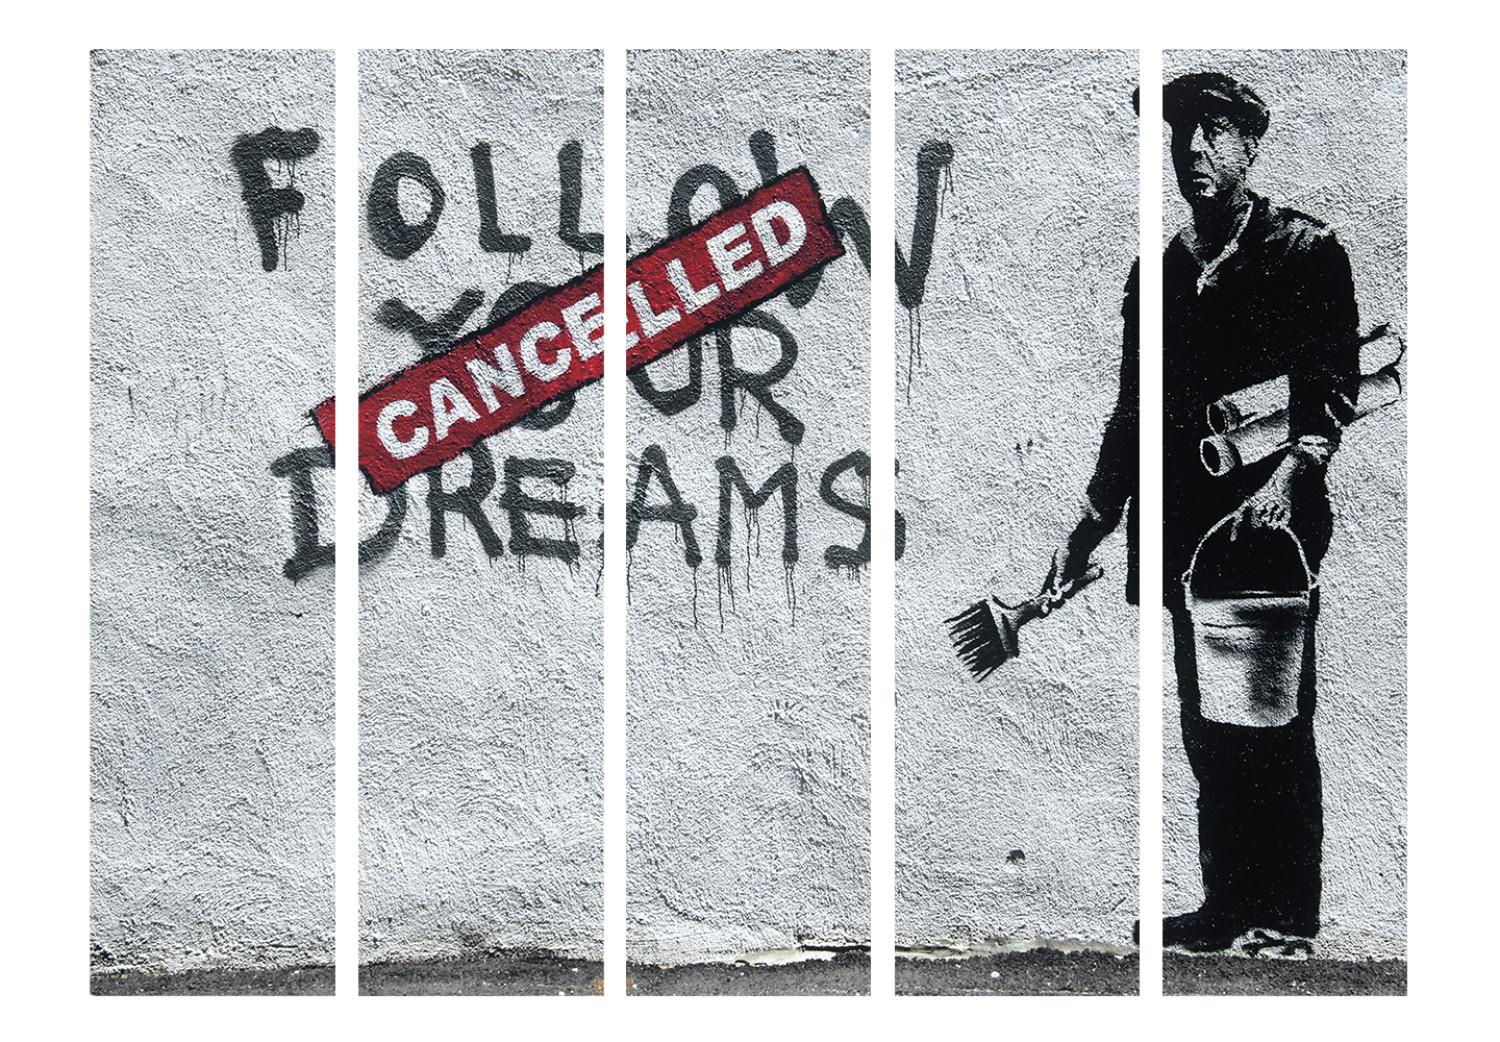 Biombo decorativo Dreams Cancelled (Banksy) II [Room Dividers]